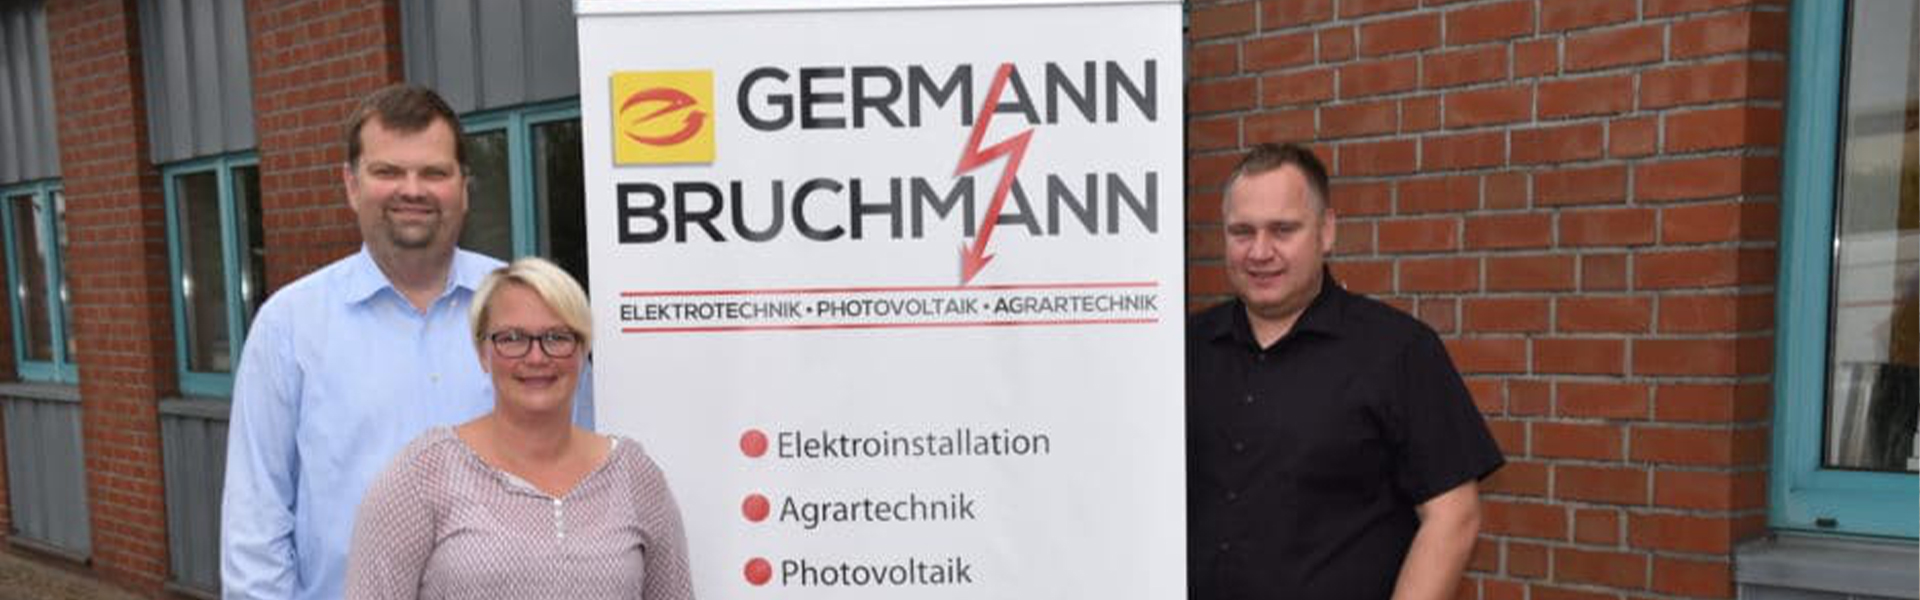 Elektrotechnik Germann & Bruchmann GmbH